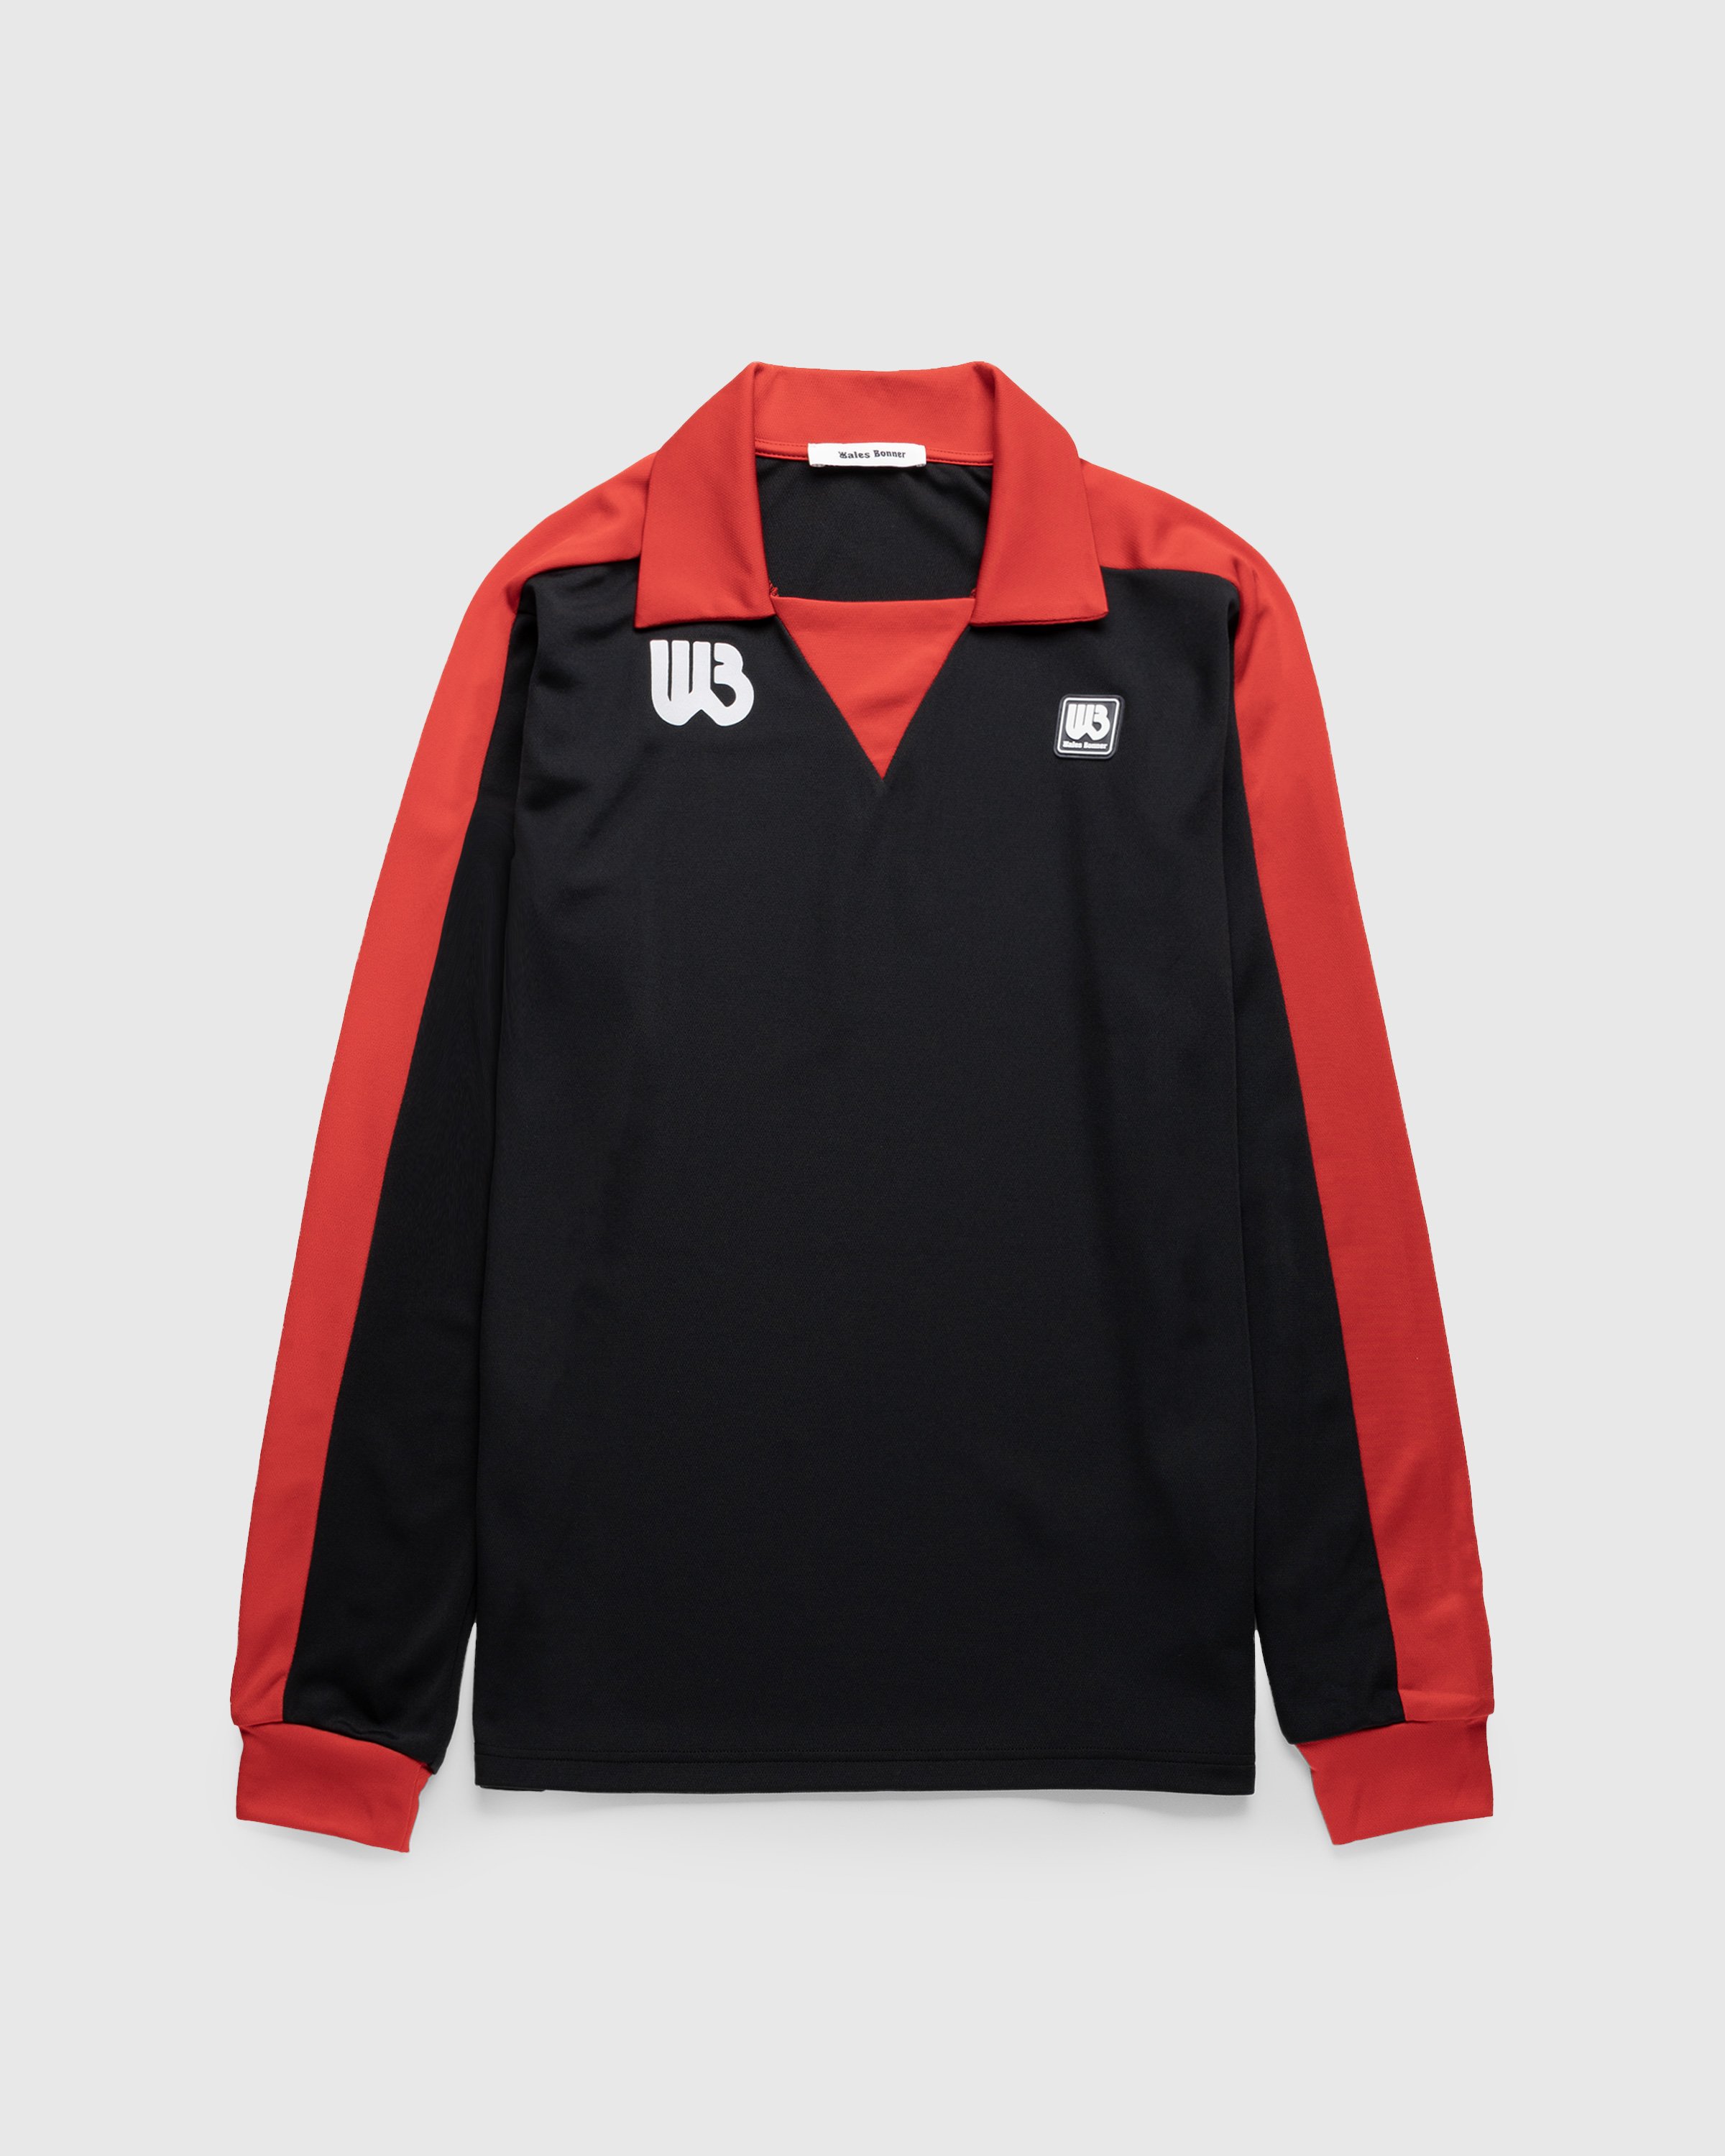 Wales Bonner - Home Jersey Shirt Black/Red - Clothing - Black - Image 1